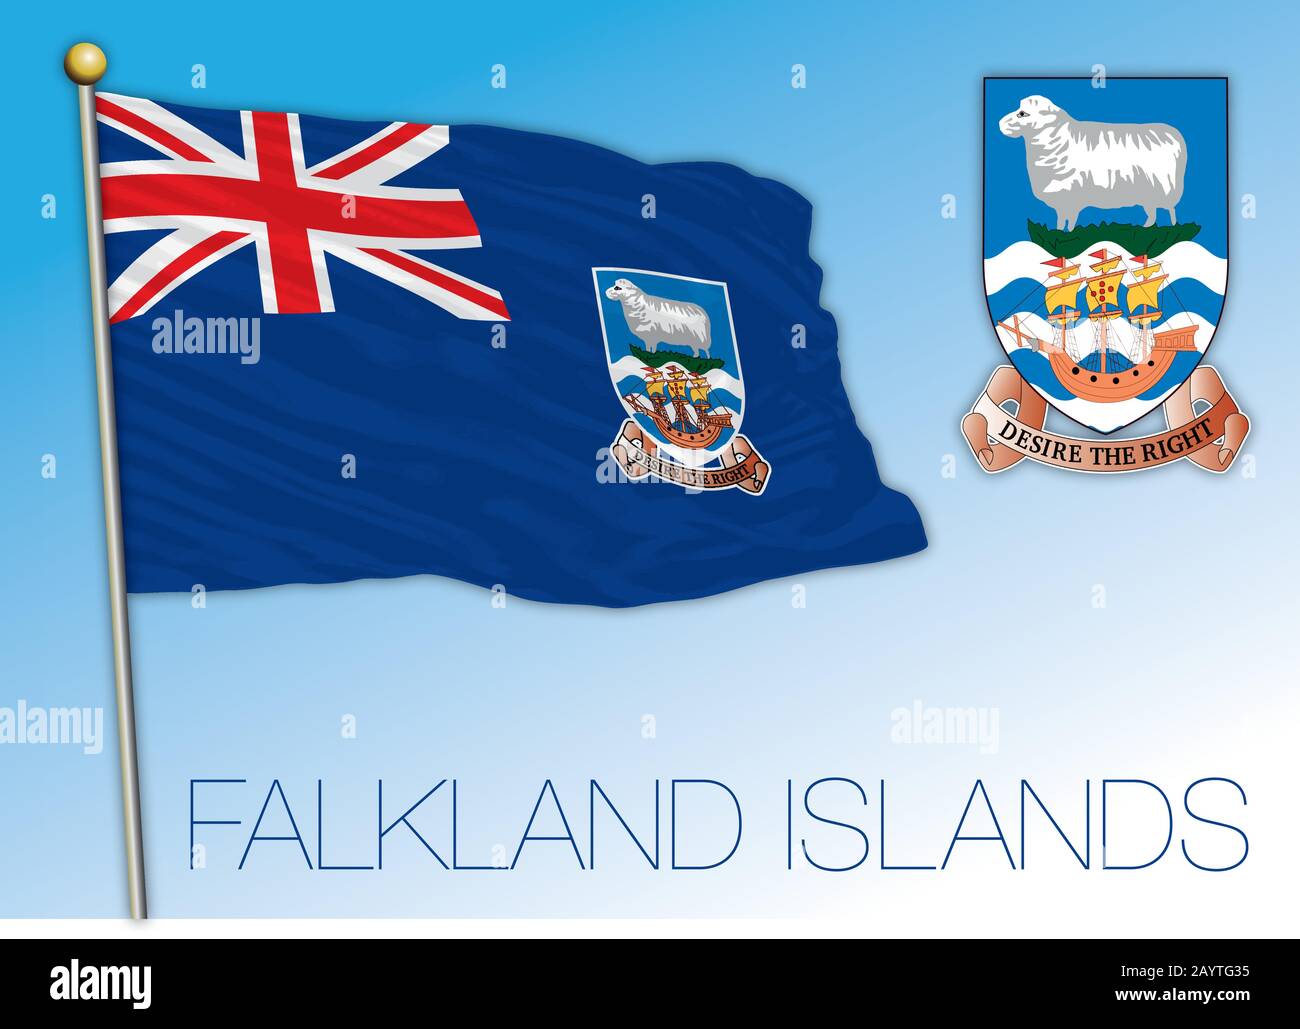 Falkland Islands offizielle Nationalflaggen und -Wappen, Großbritannien, Vektorgrafiken Stock Vektor